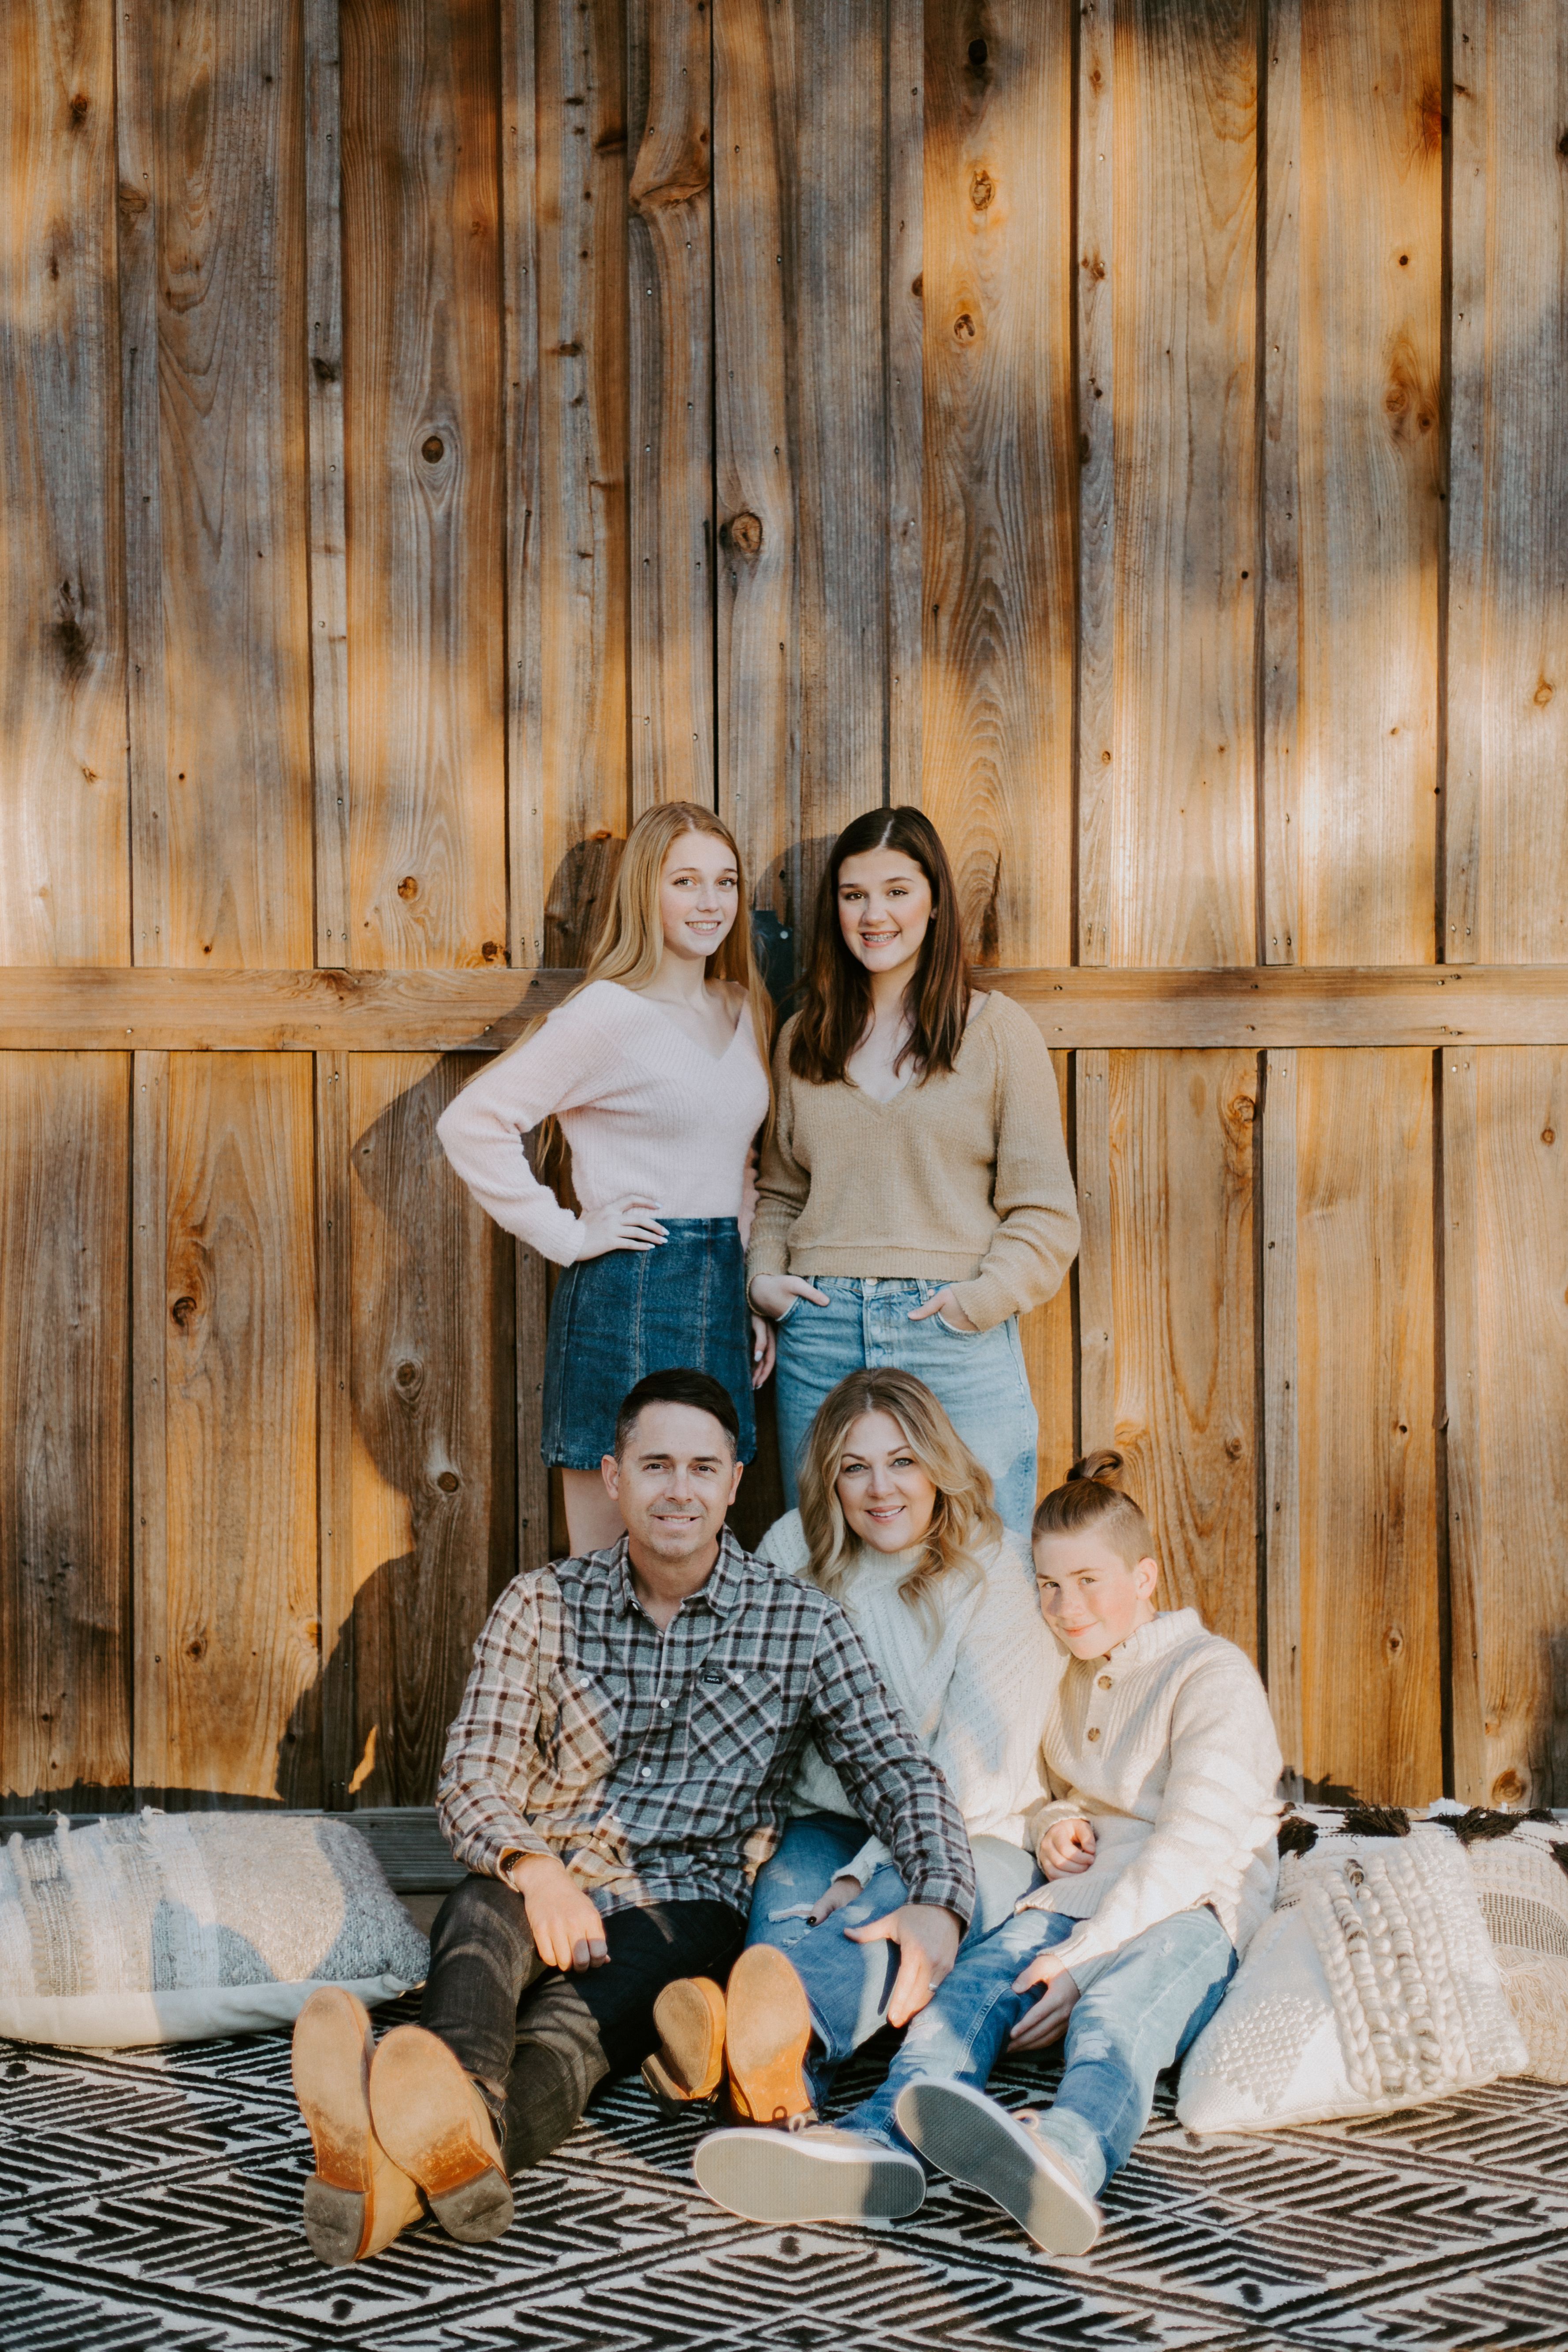 Family Christmas Pictures | Louisiana Portrait Photographer -   16 christmas photoshoot family outdoor barn ideas